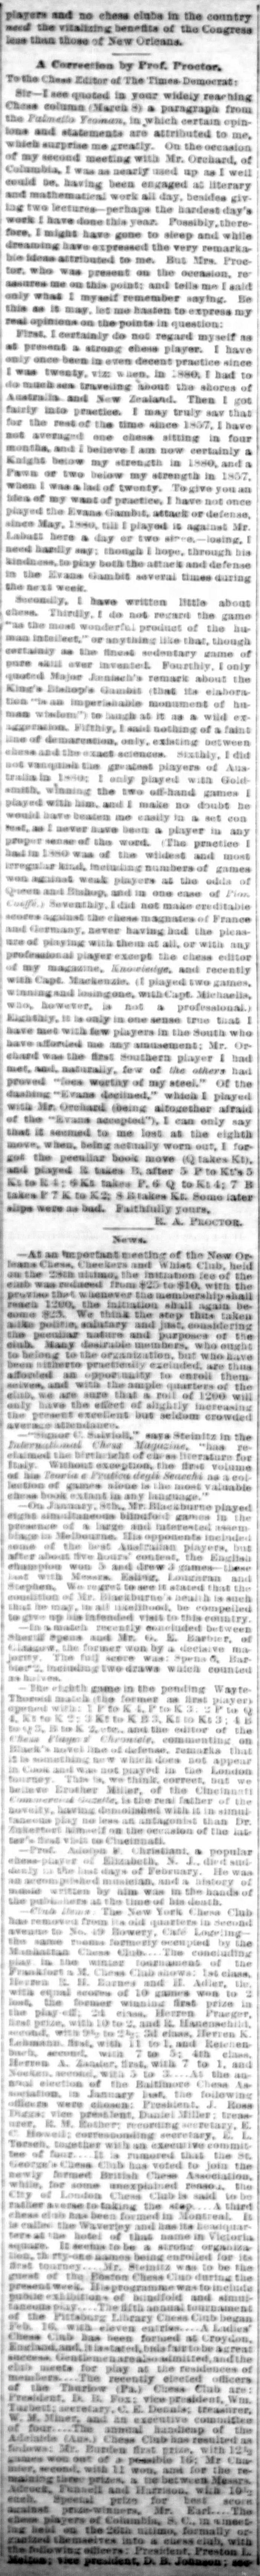 1885.03.15-02 New Orleans Times-Democrat.jpg